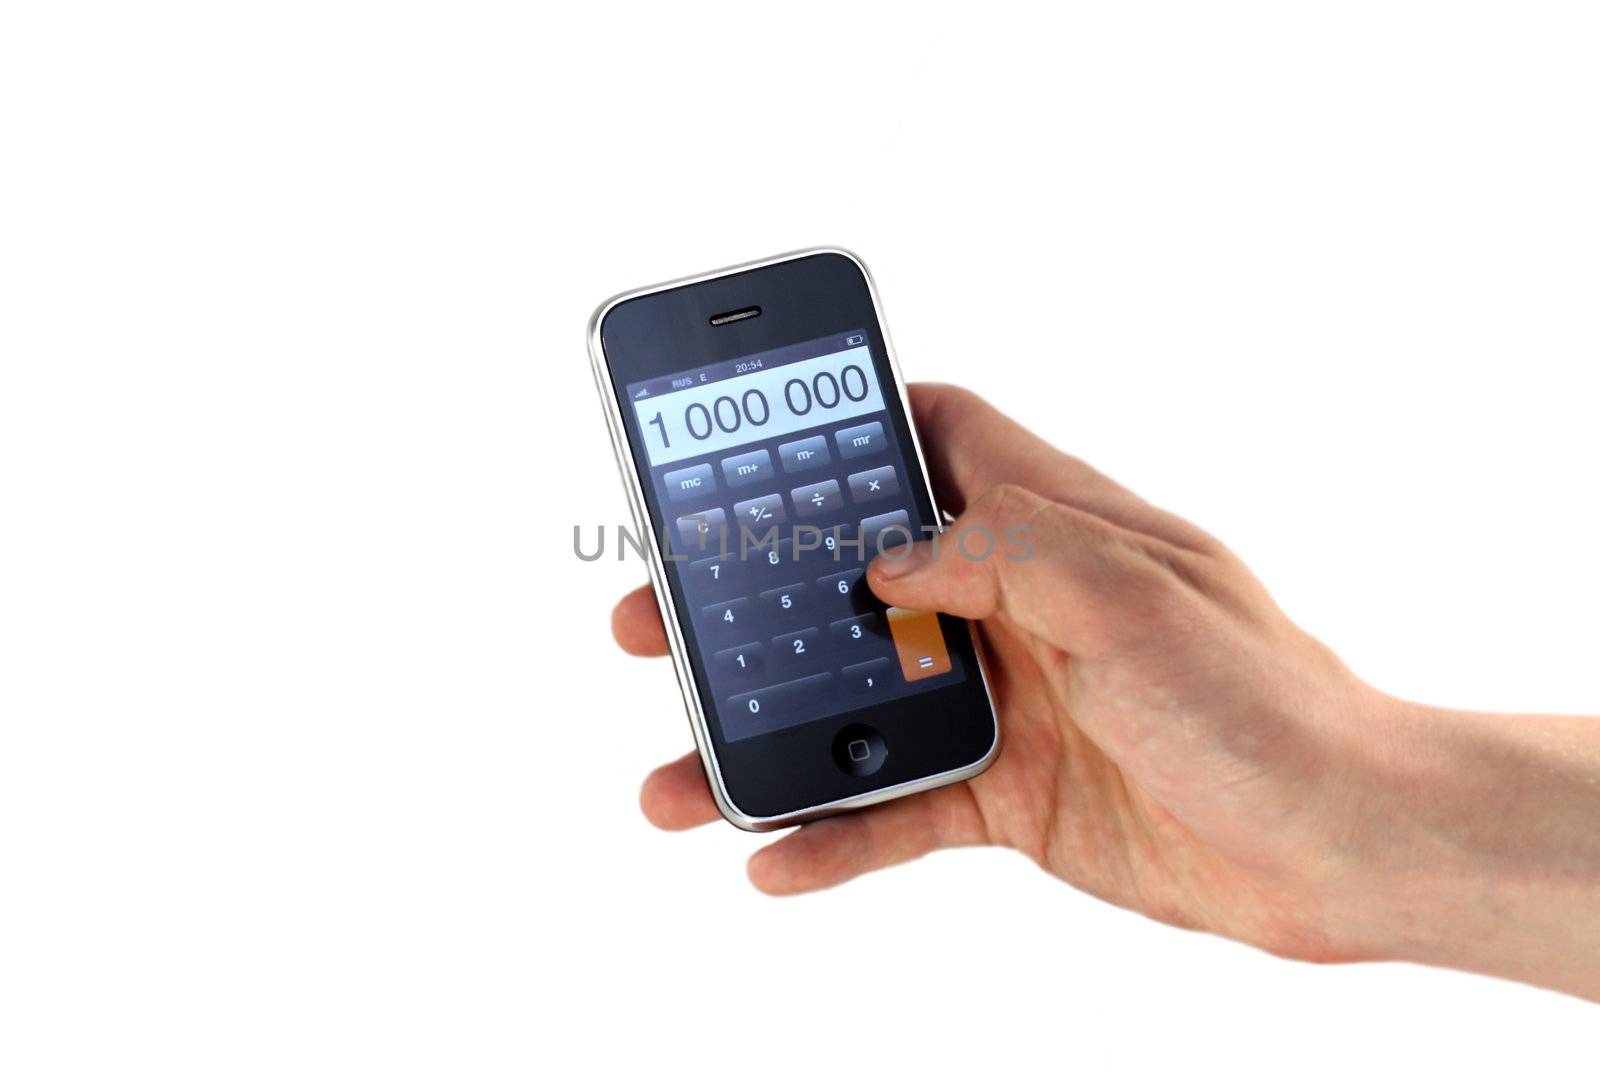 mobile, phone, hand, finger, income, business, presses, button, account, calculator